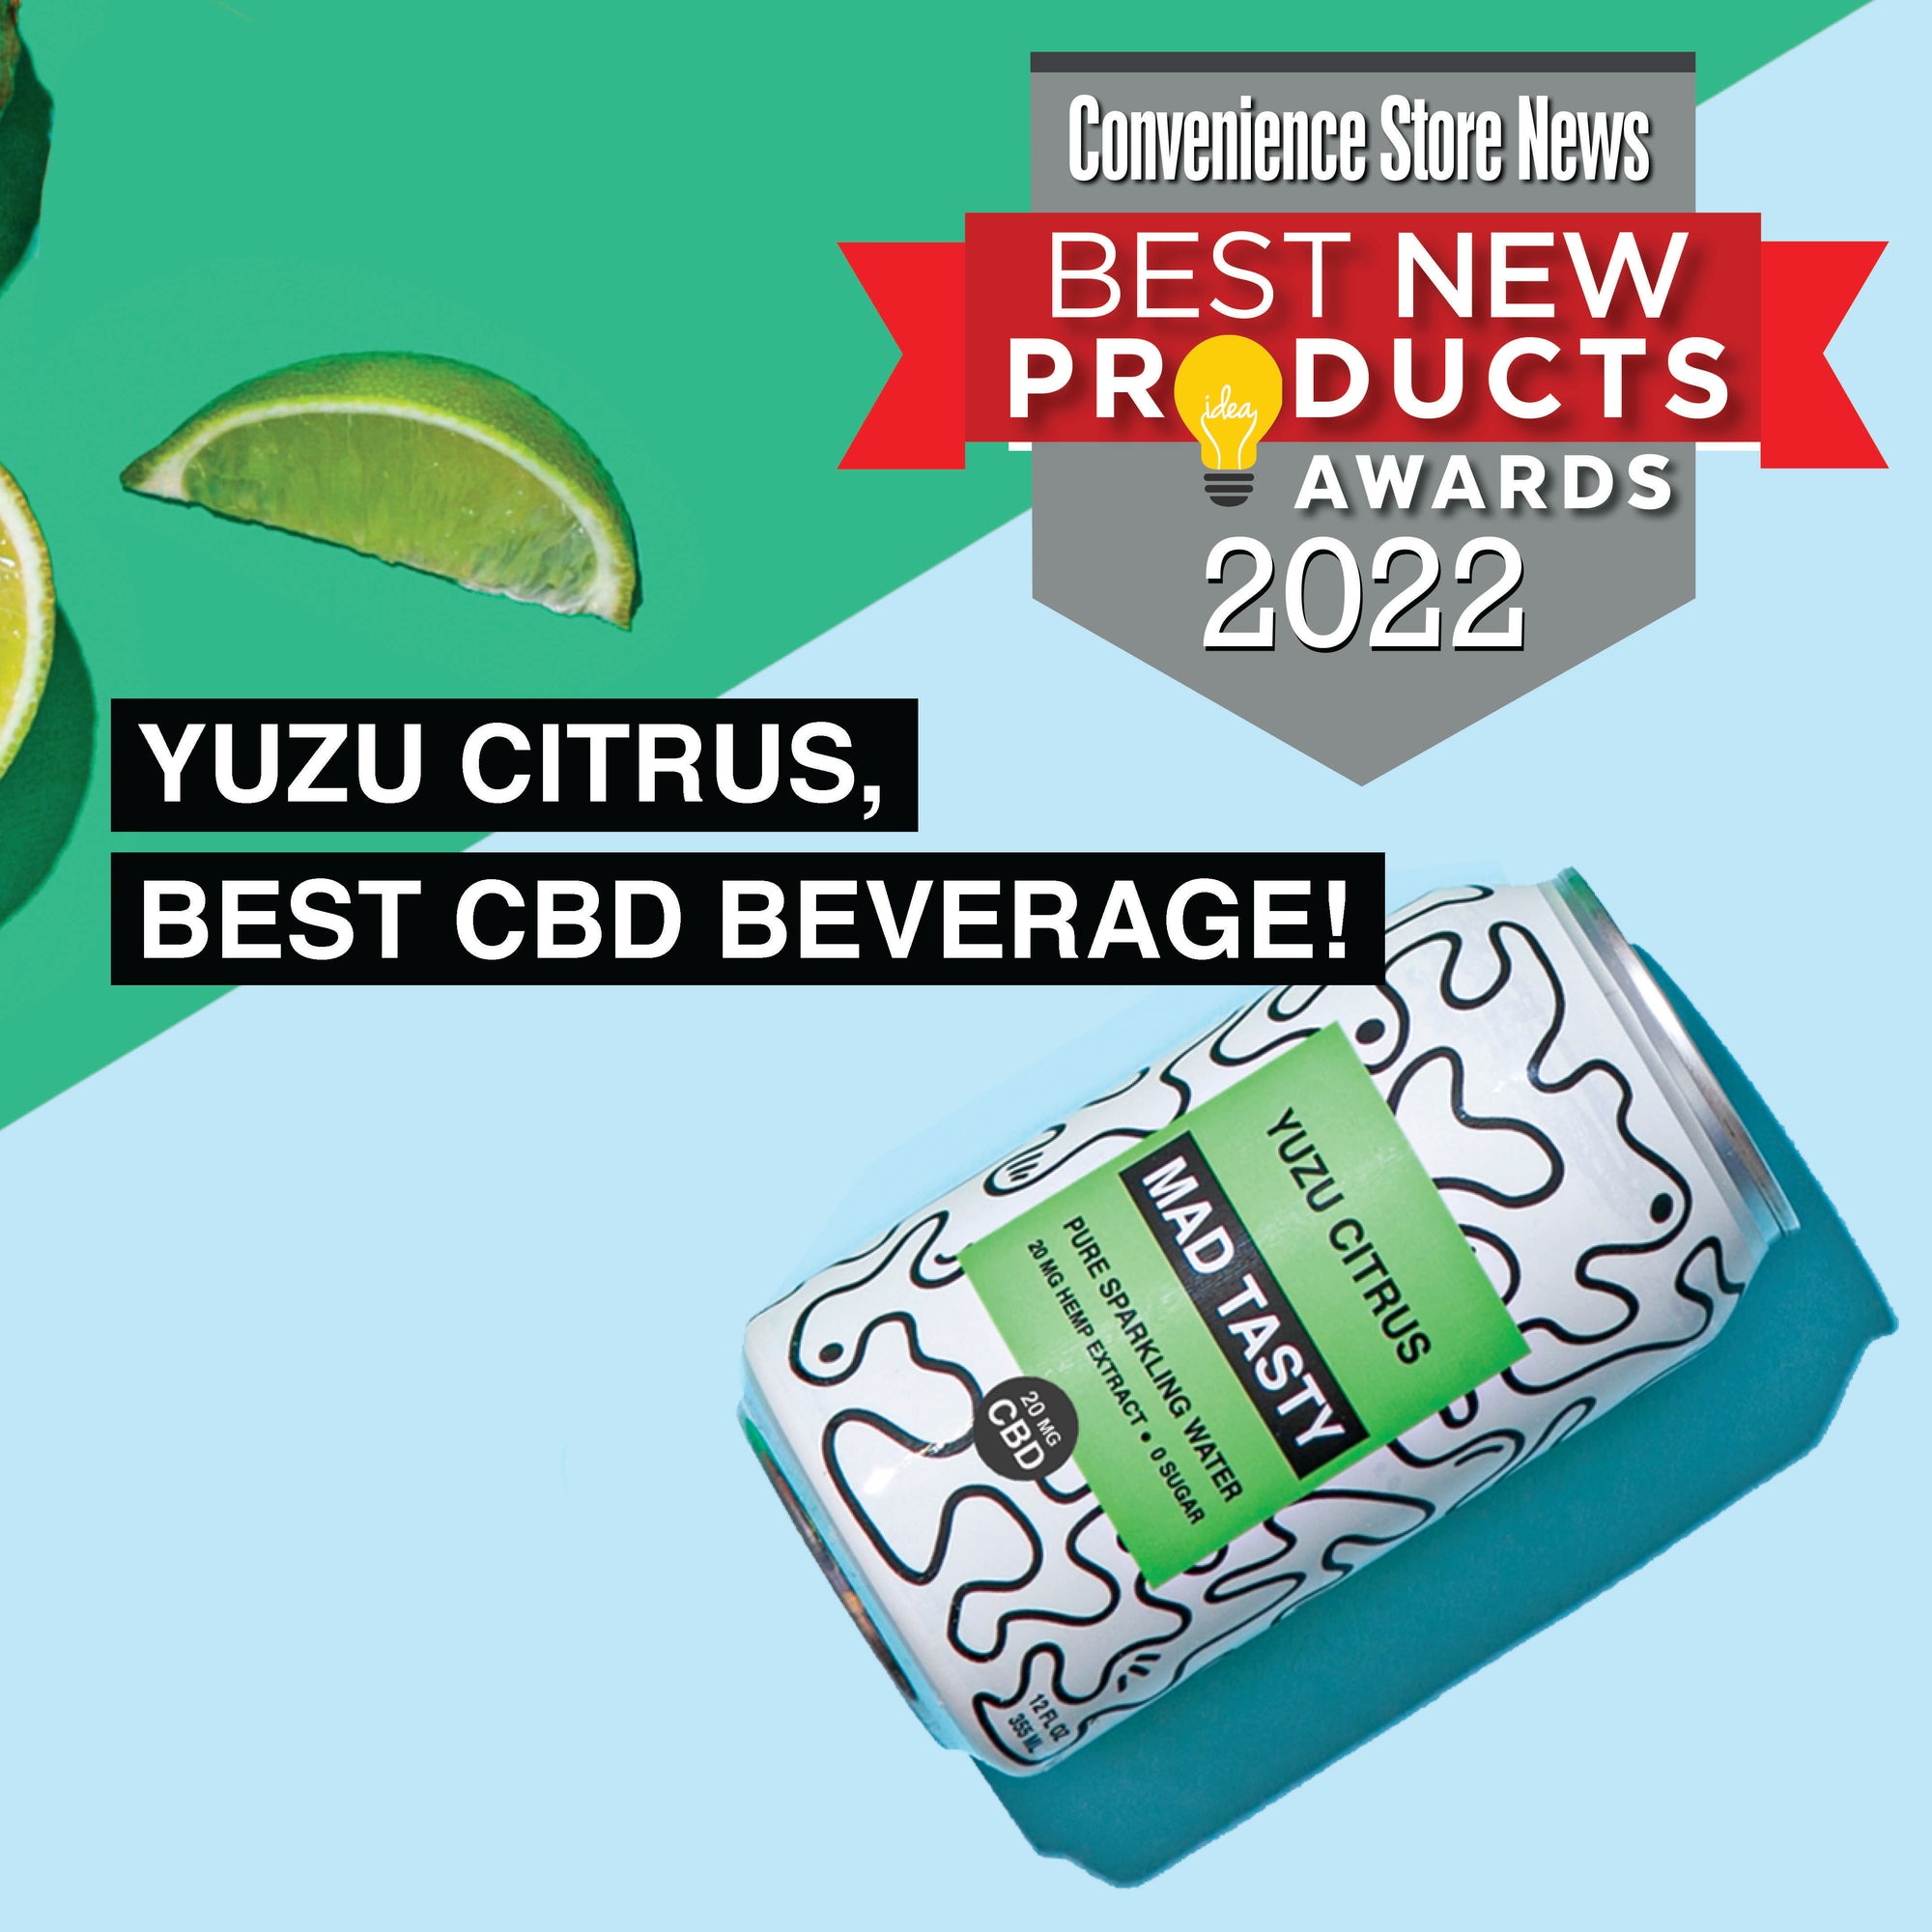 Yuzu Citrus, 2022 Best CBD Beverage!